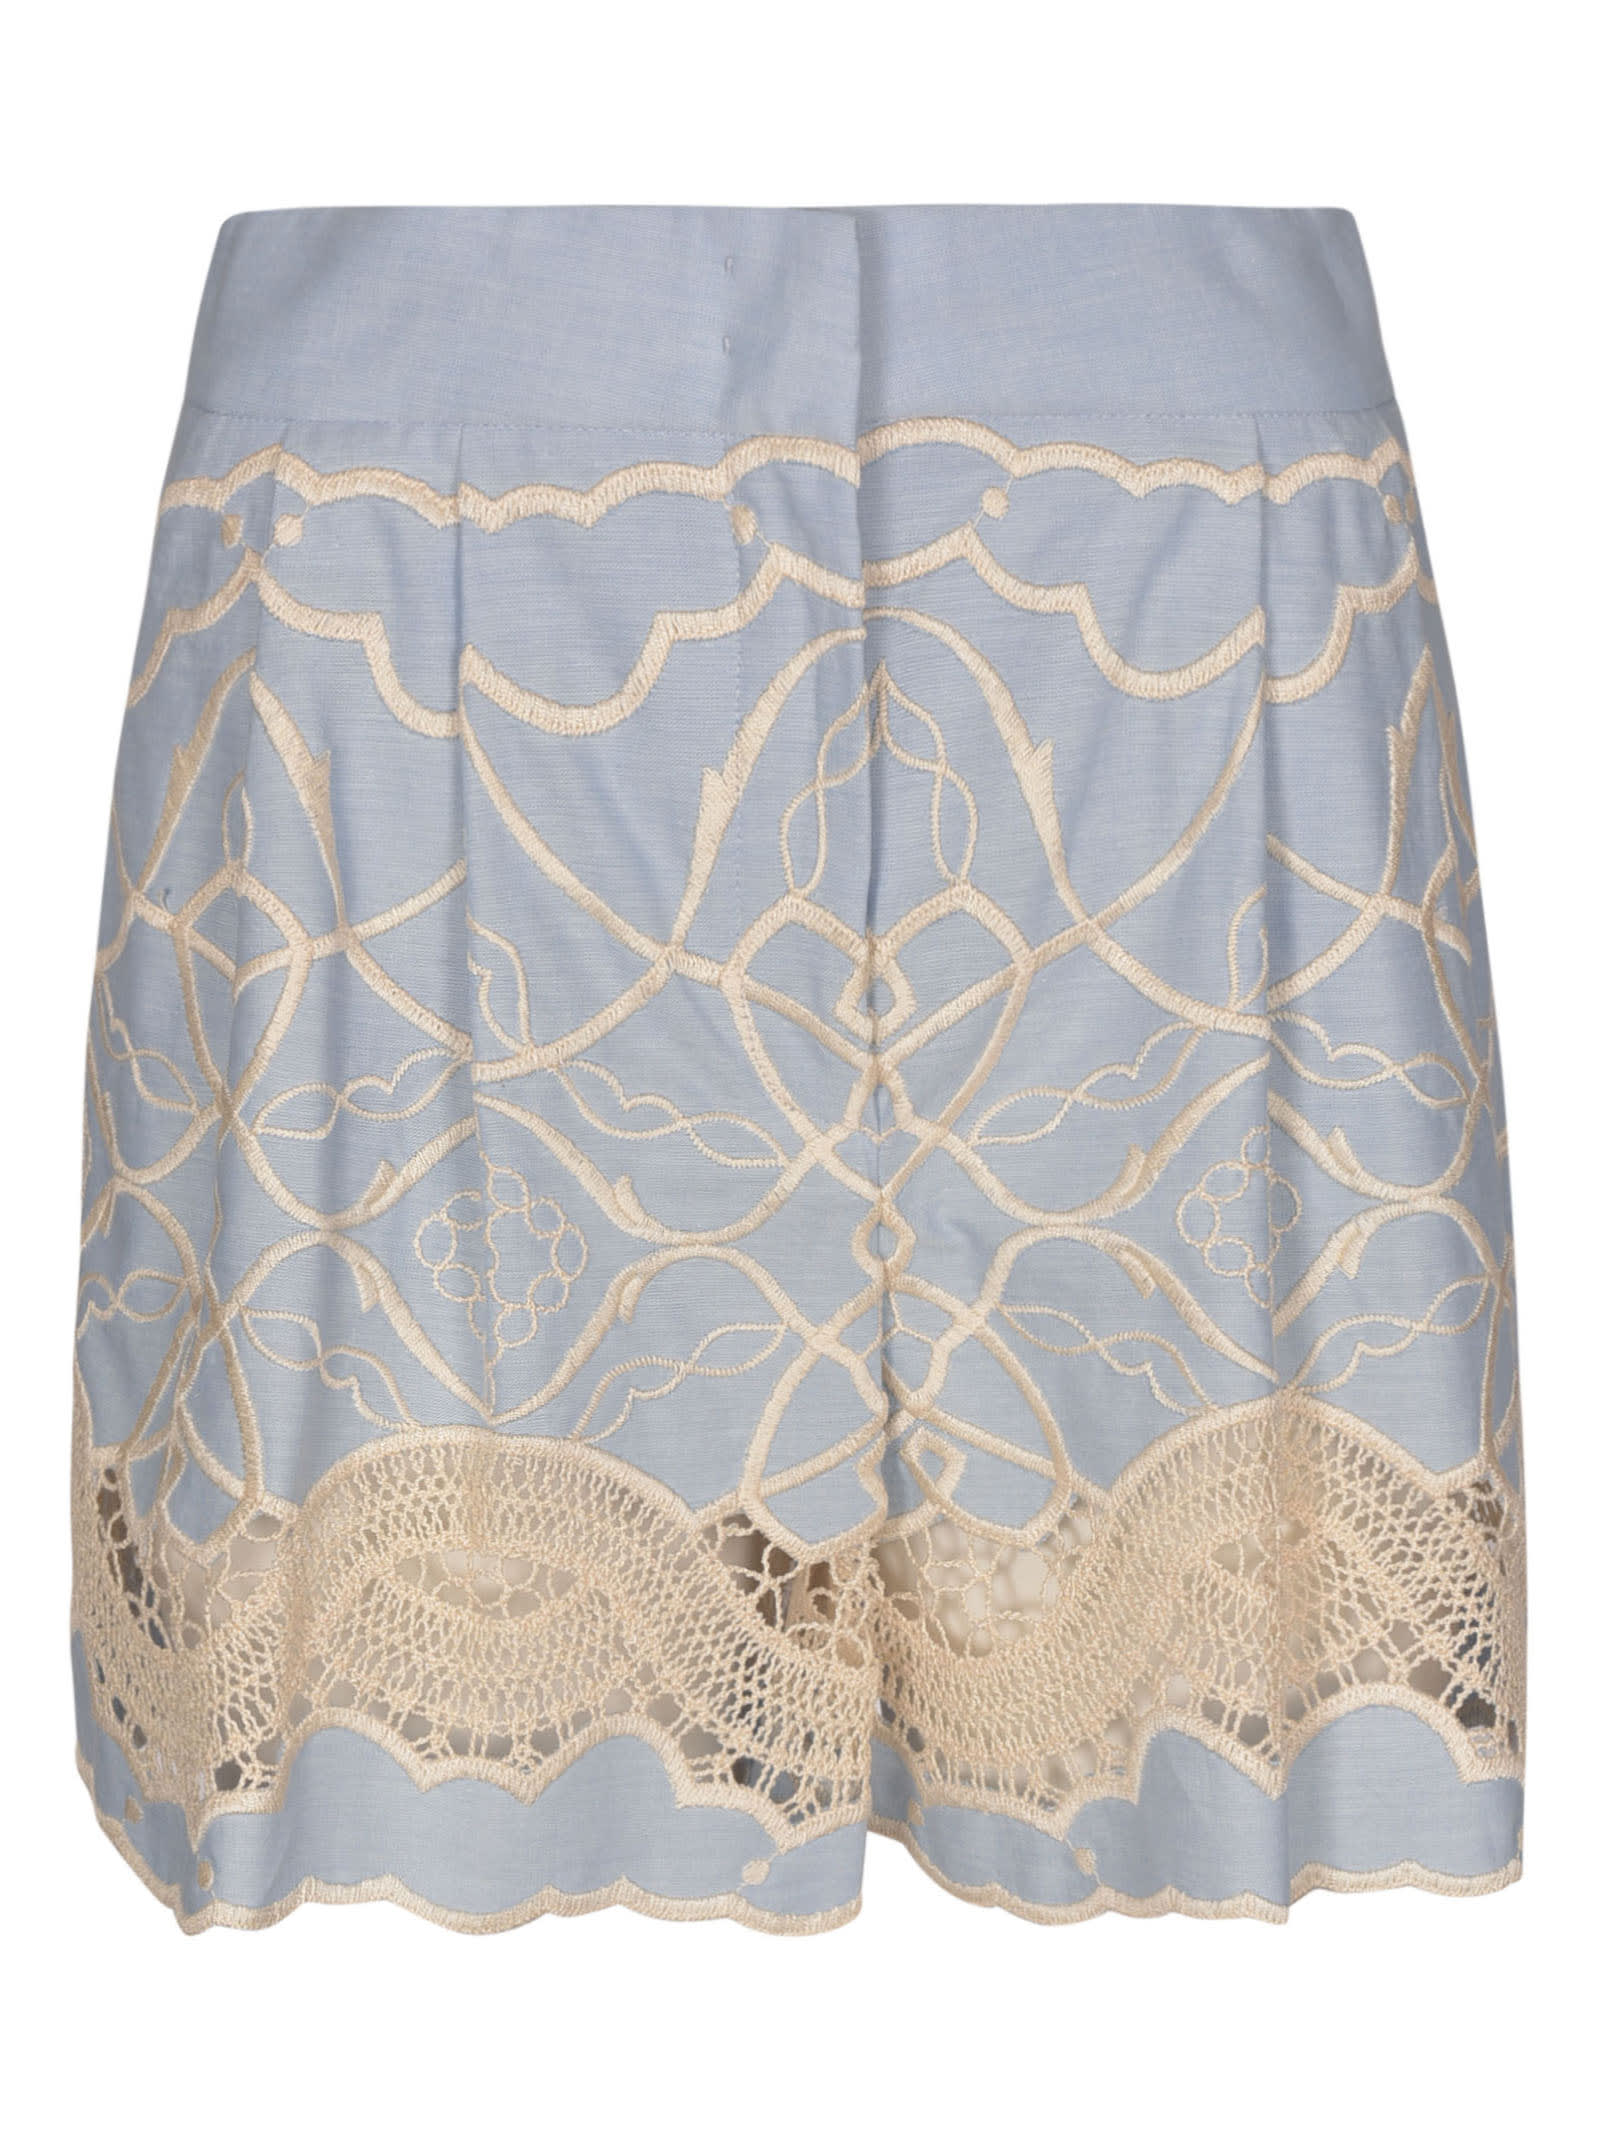 Alberta Ferretti Perforated Panel Embroidered Shorts